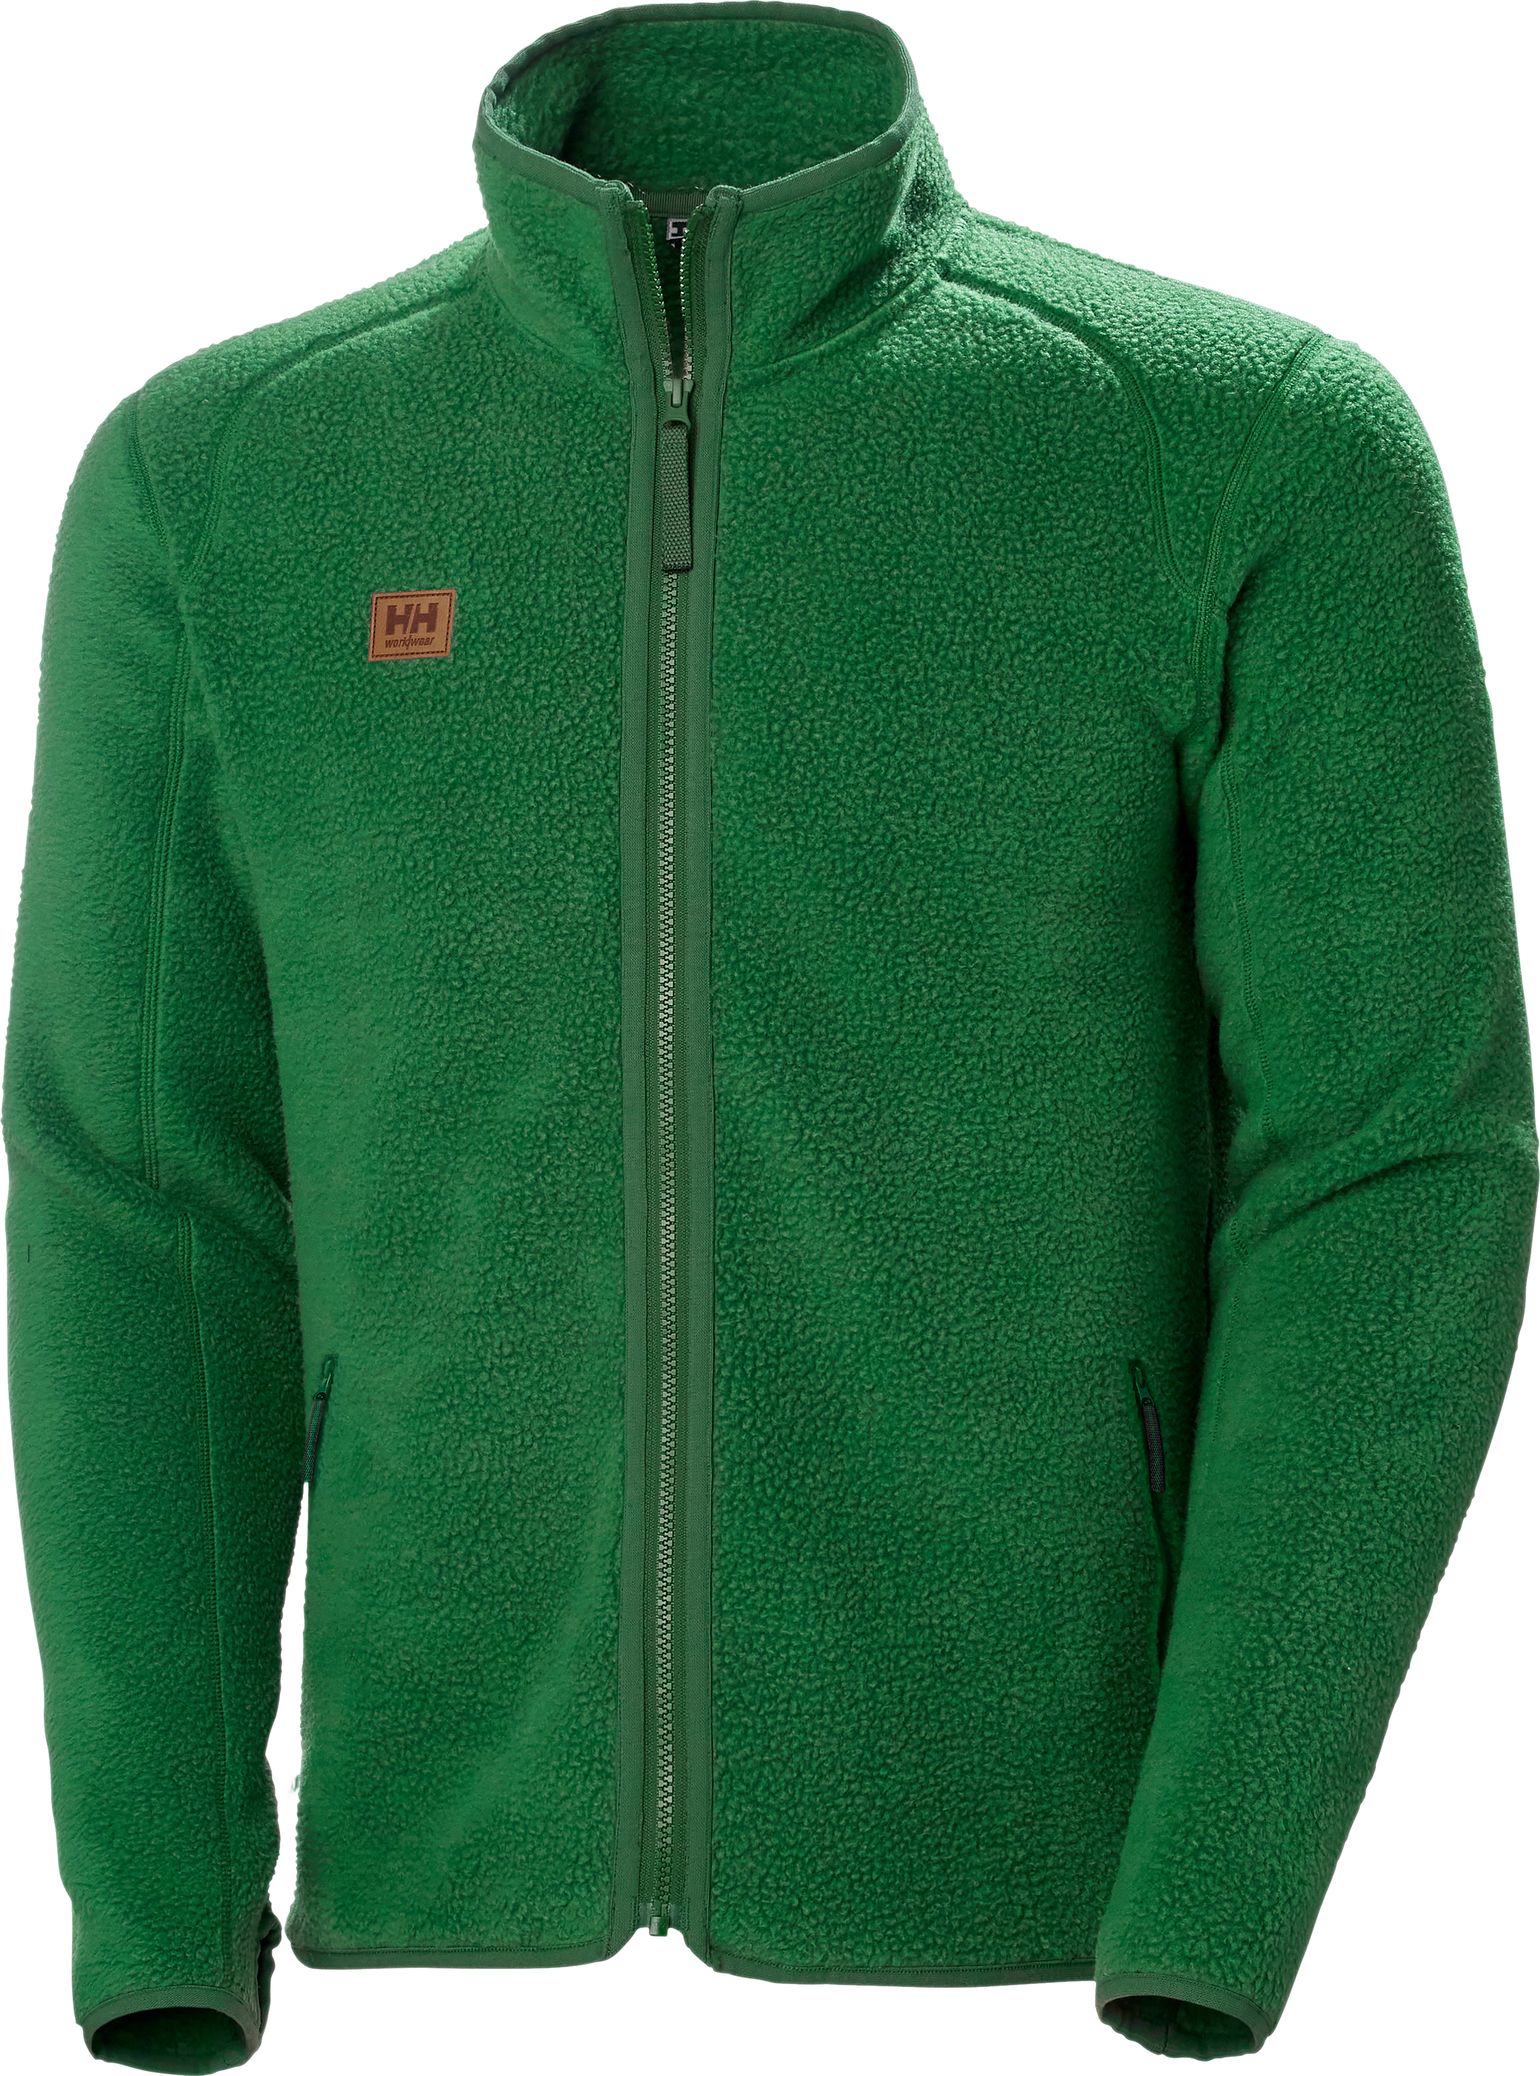 Men's Heritage Pile Jacket Green